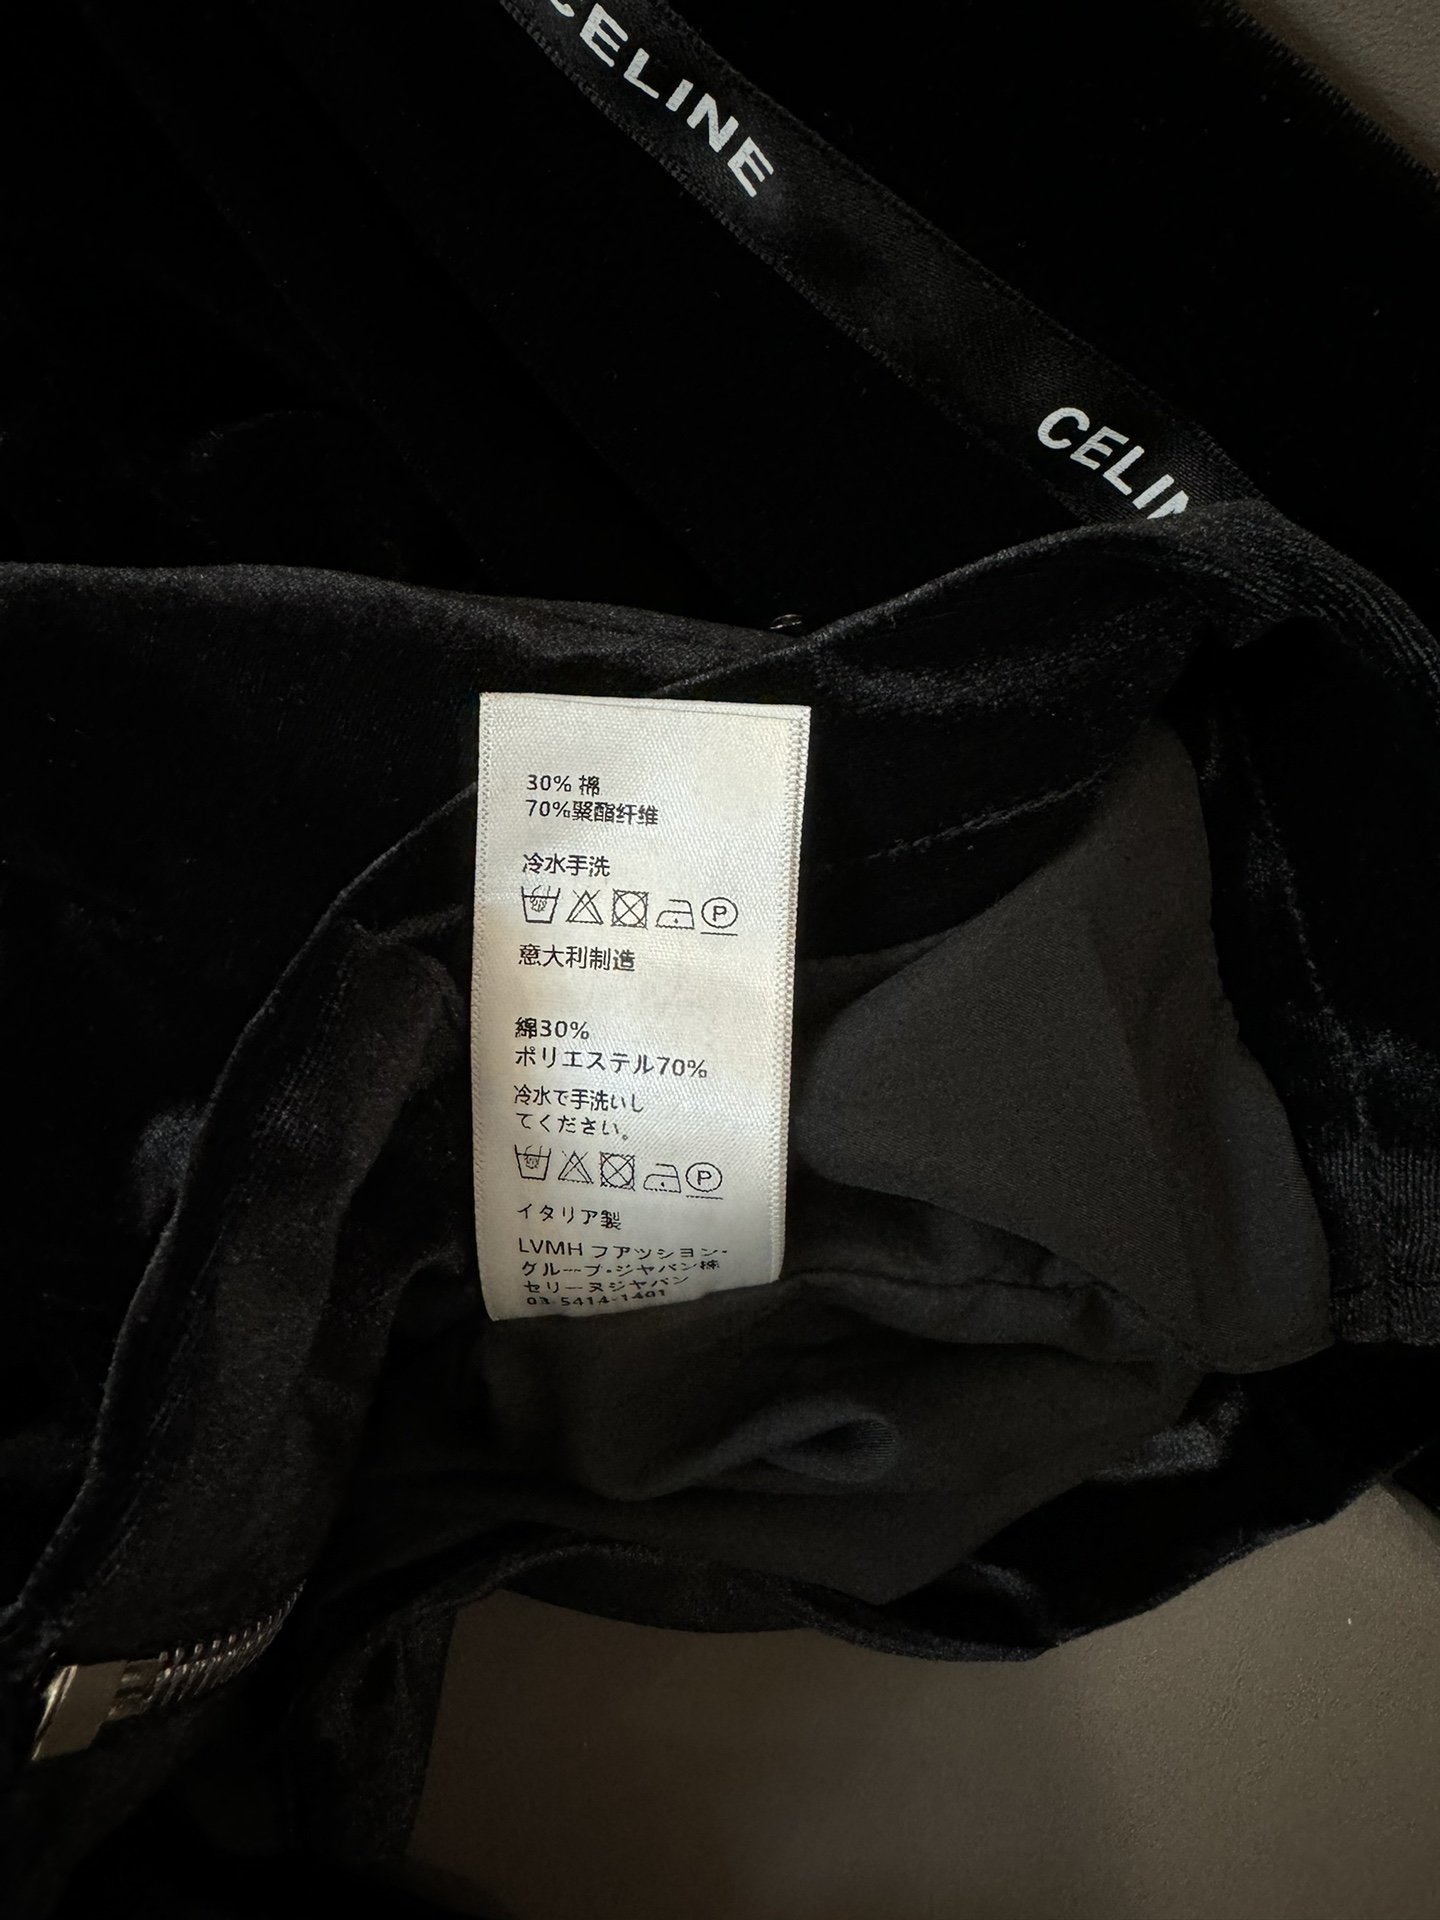 XC24022#新款套装Celine丝绒刺绣拉链外套长裤套装黑色SML